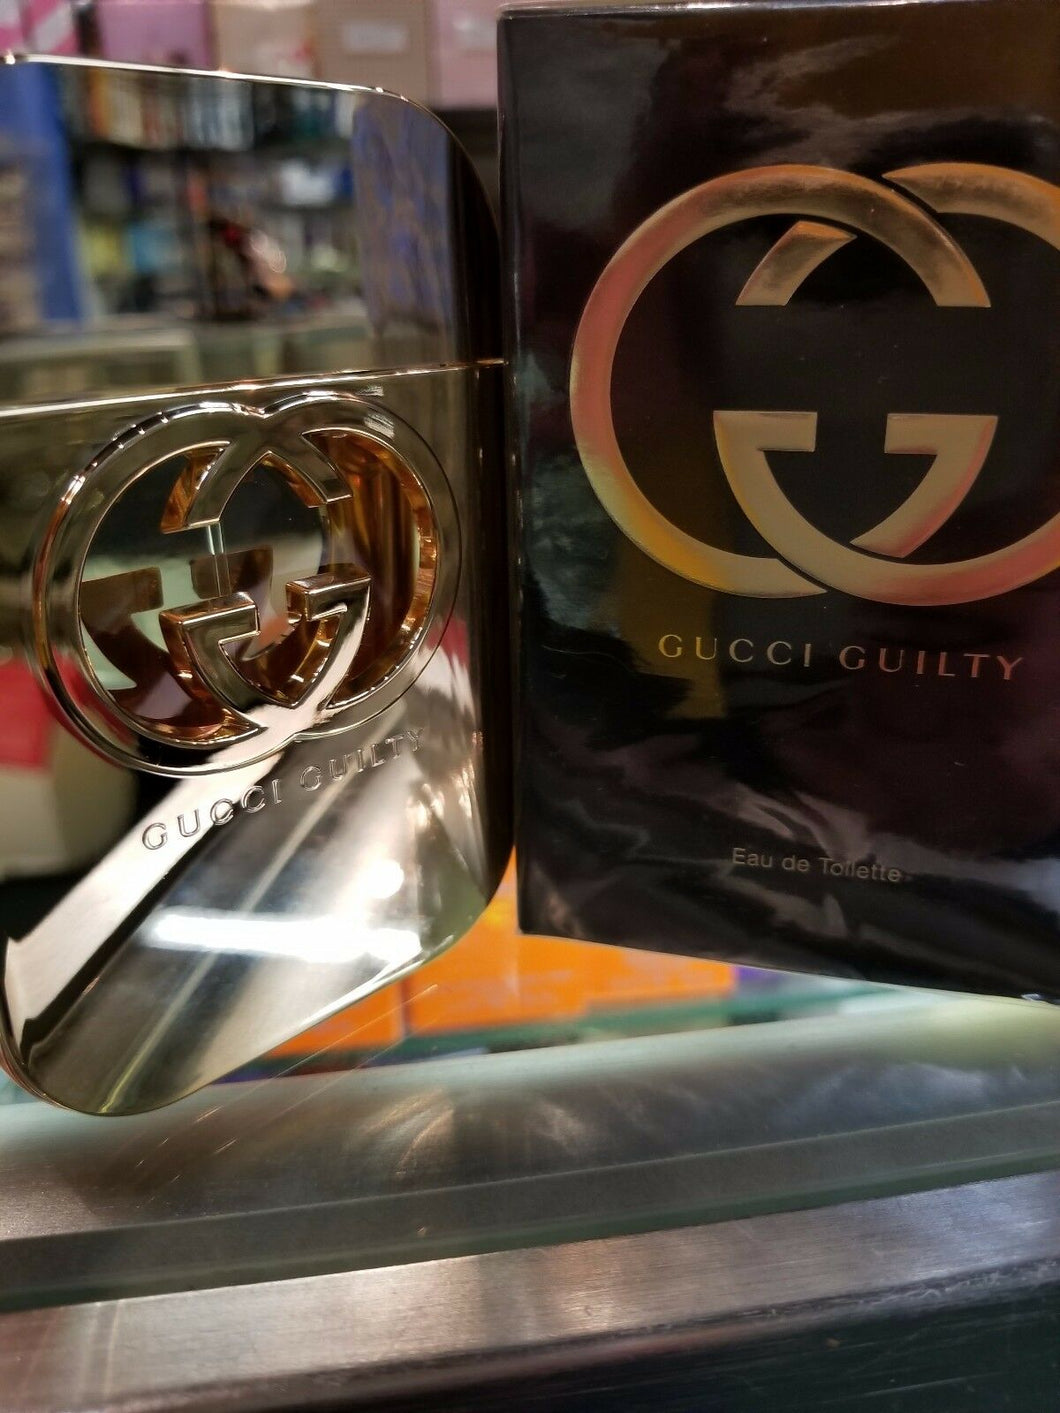 Gucci Guilty by Gucci Eau De Toilette Spray 2.5 oz 75 ml for Women * SEALED BOX - Perfume Gallery